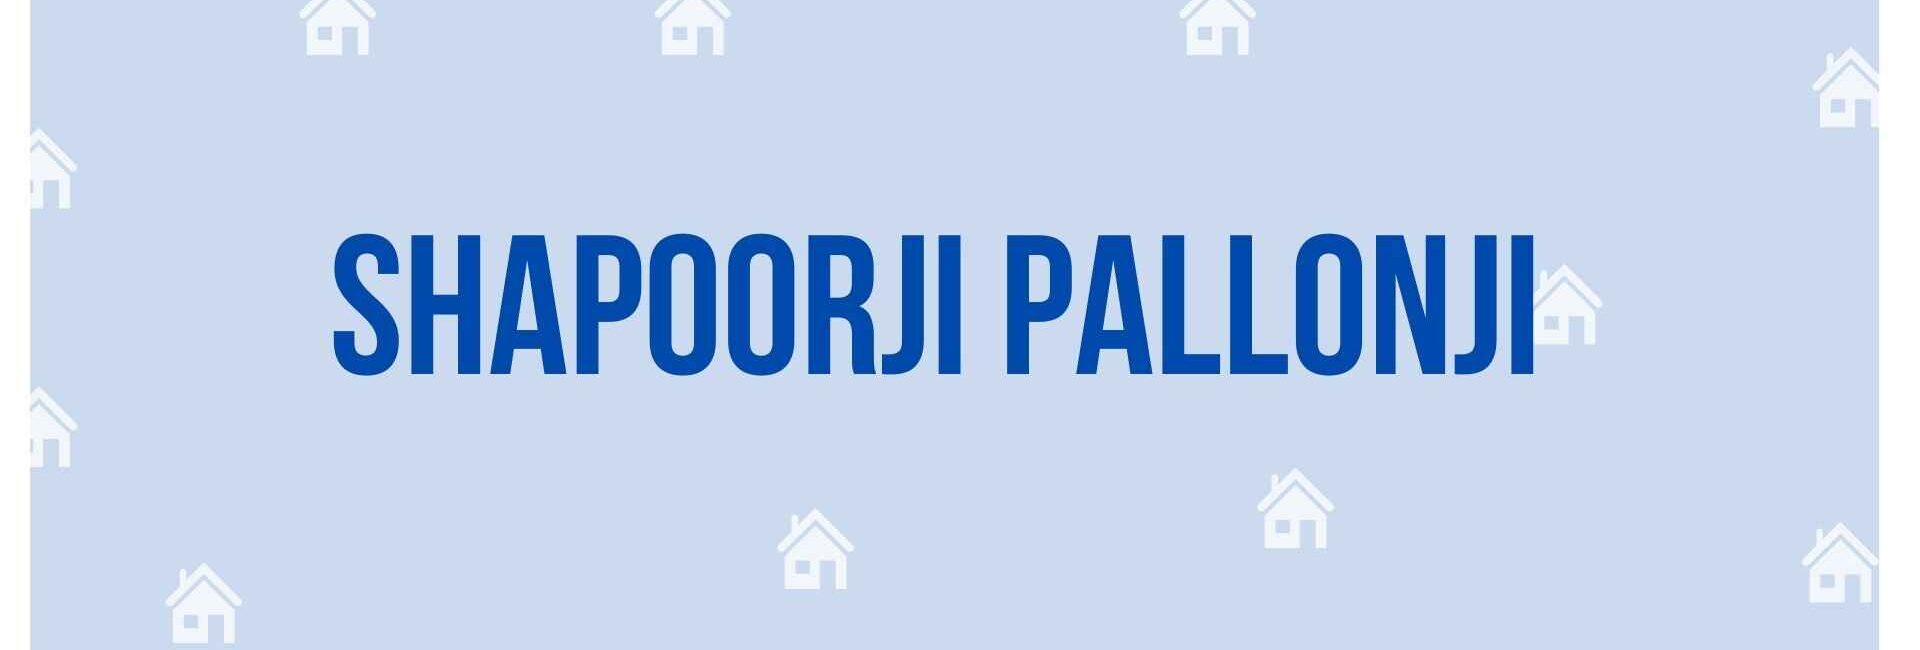 Shapoorji Pallonji - Property Dealer in Noida